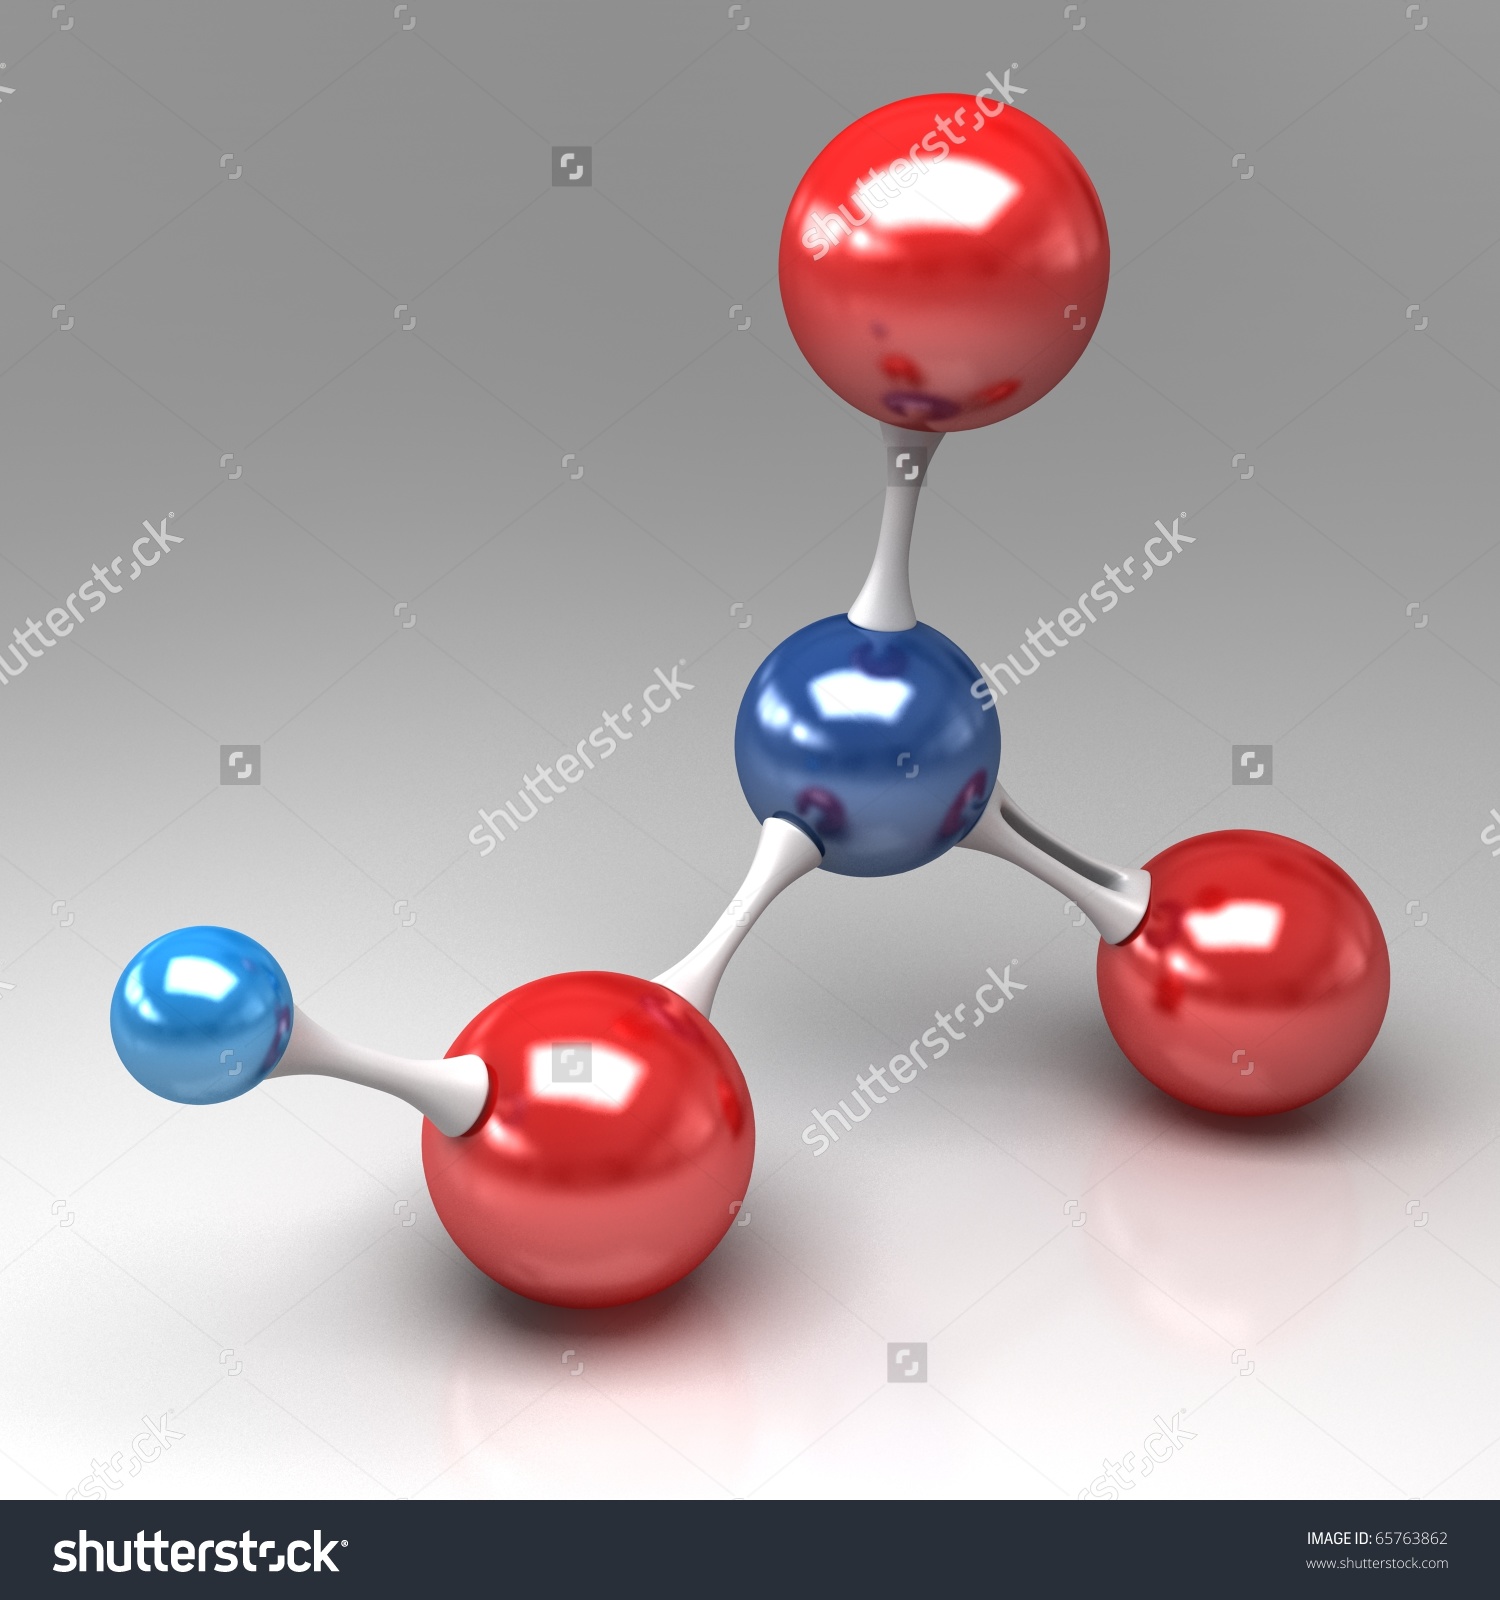 http://www.shutterstock.com/pic-65763862/stock-photo-nitric-acid-molecule.html